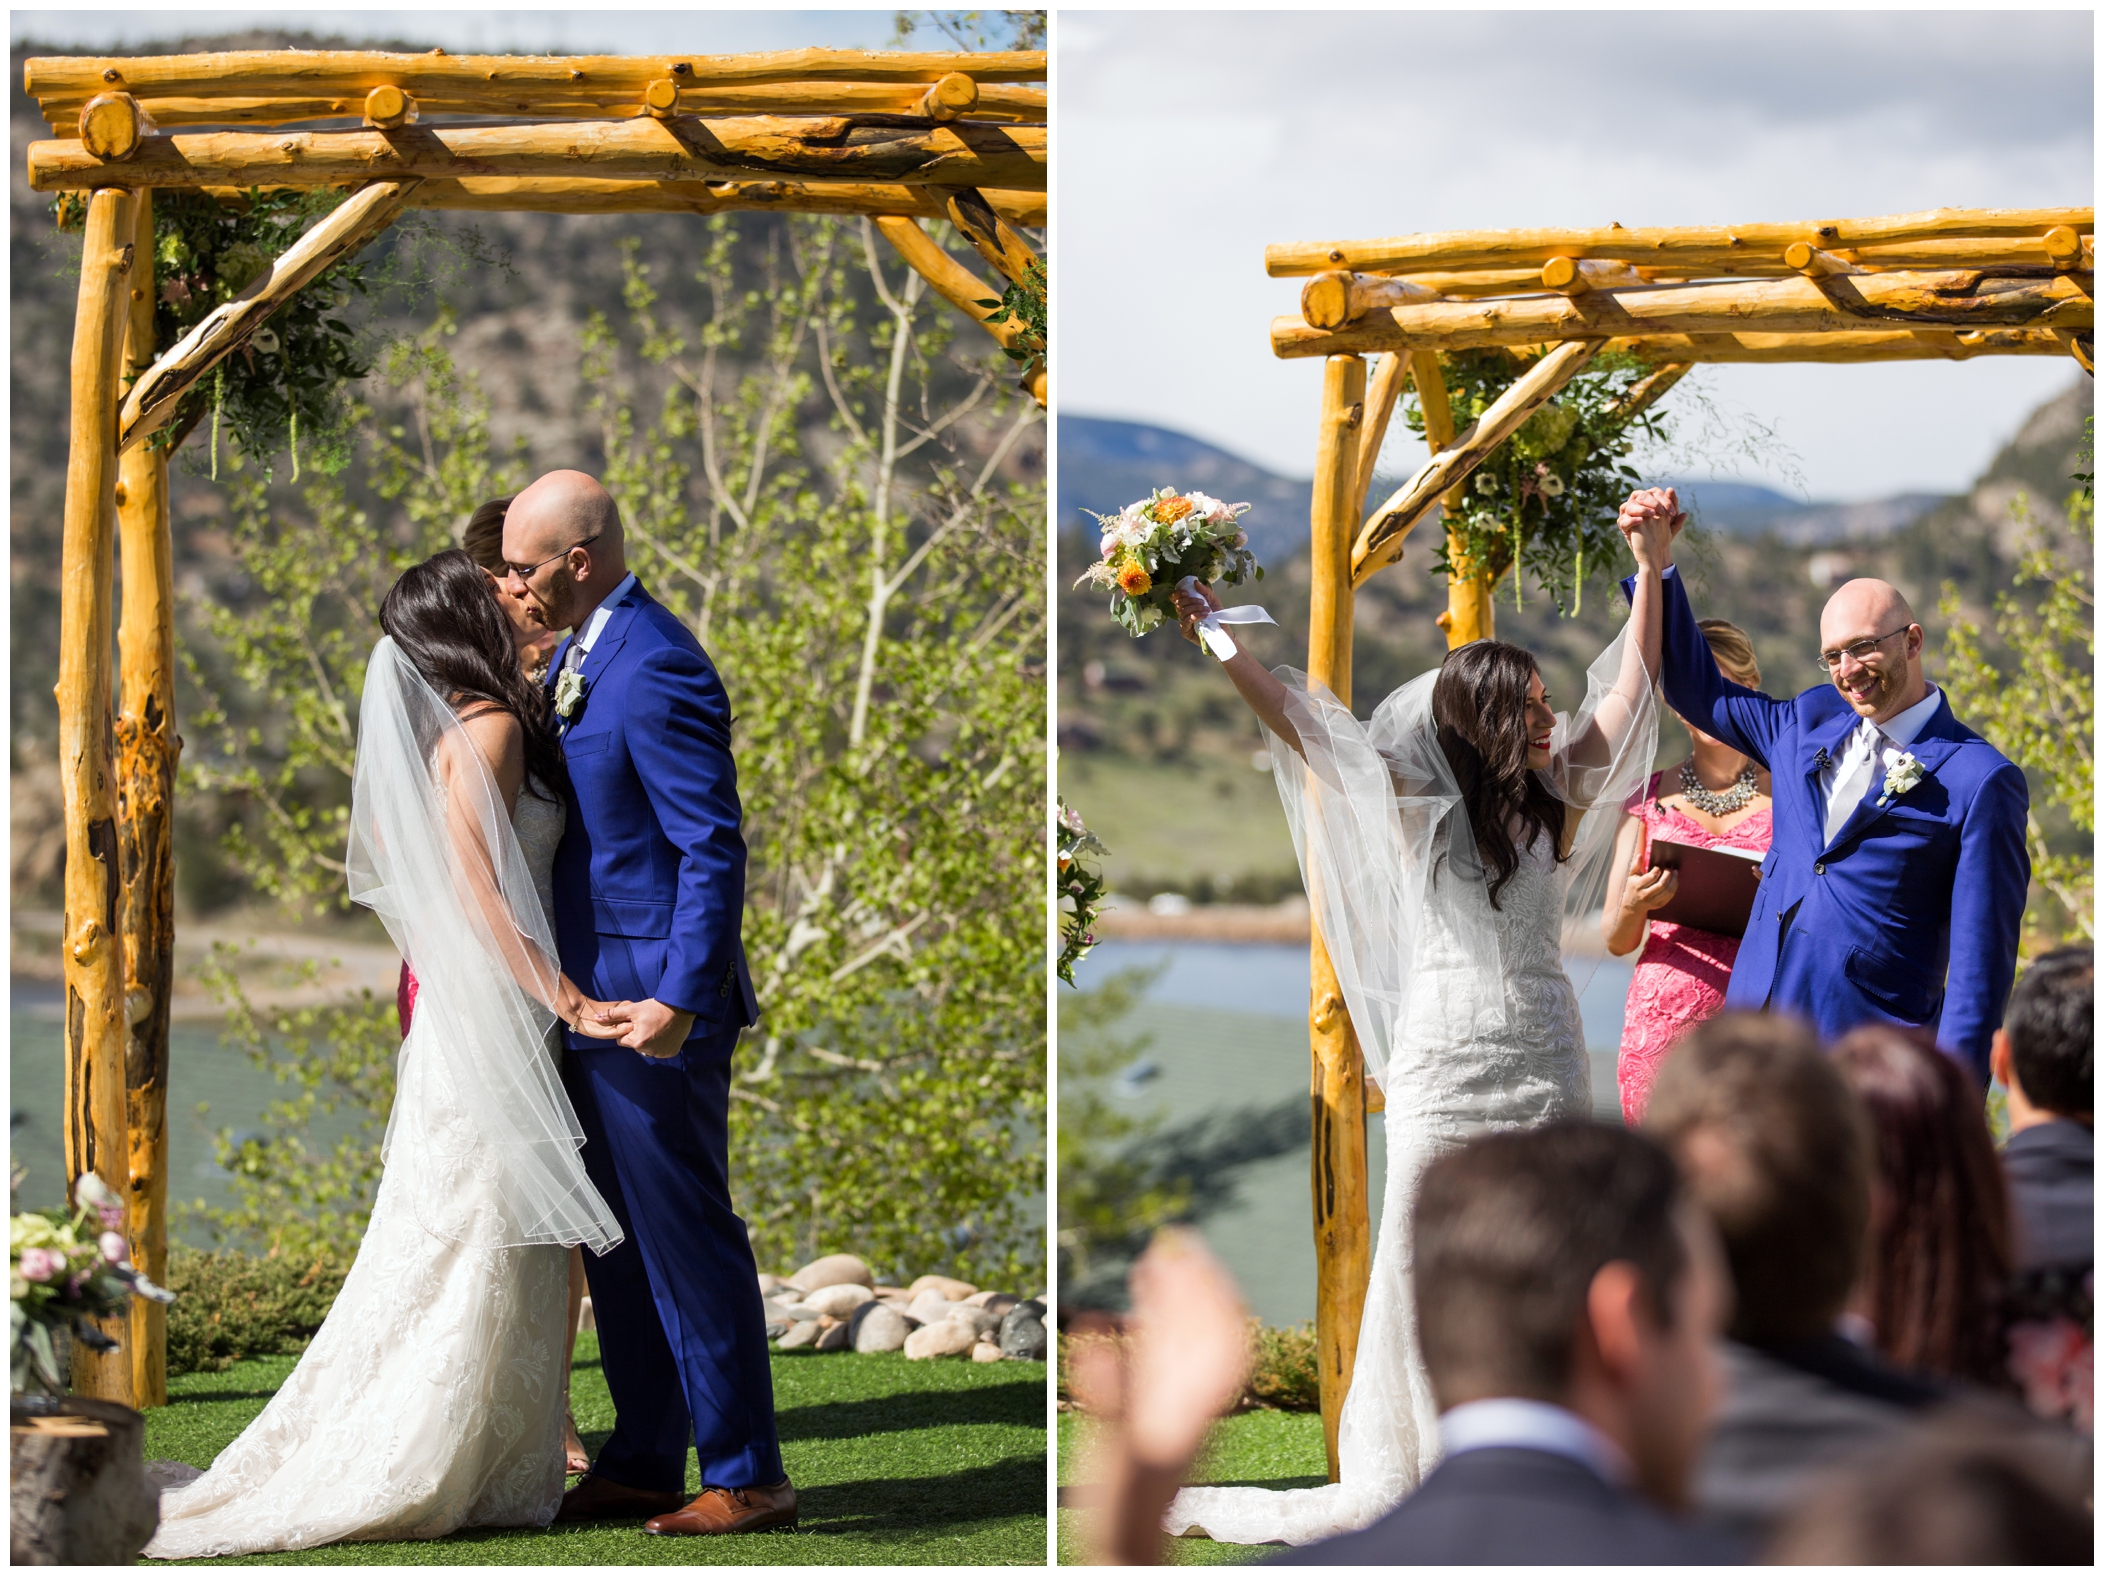 Mary's Lake Lodge wedding ceremony photos 